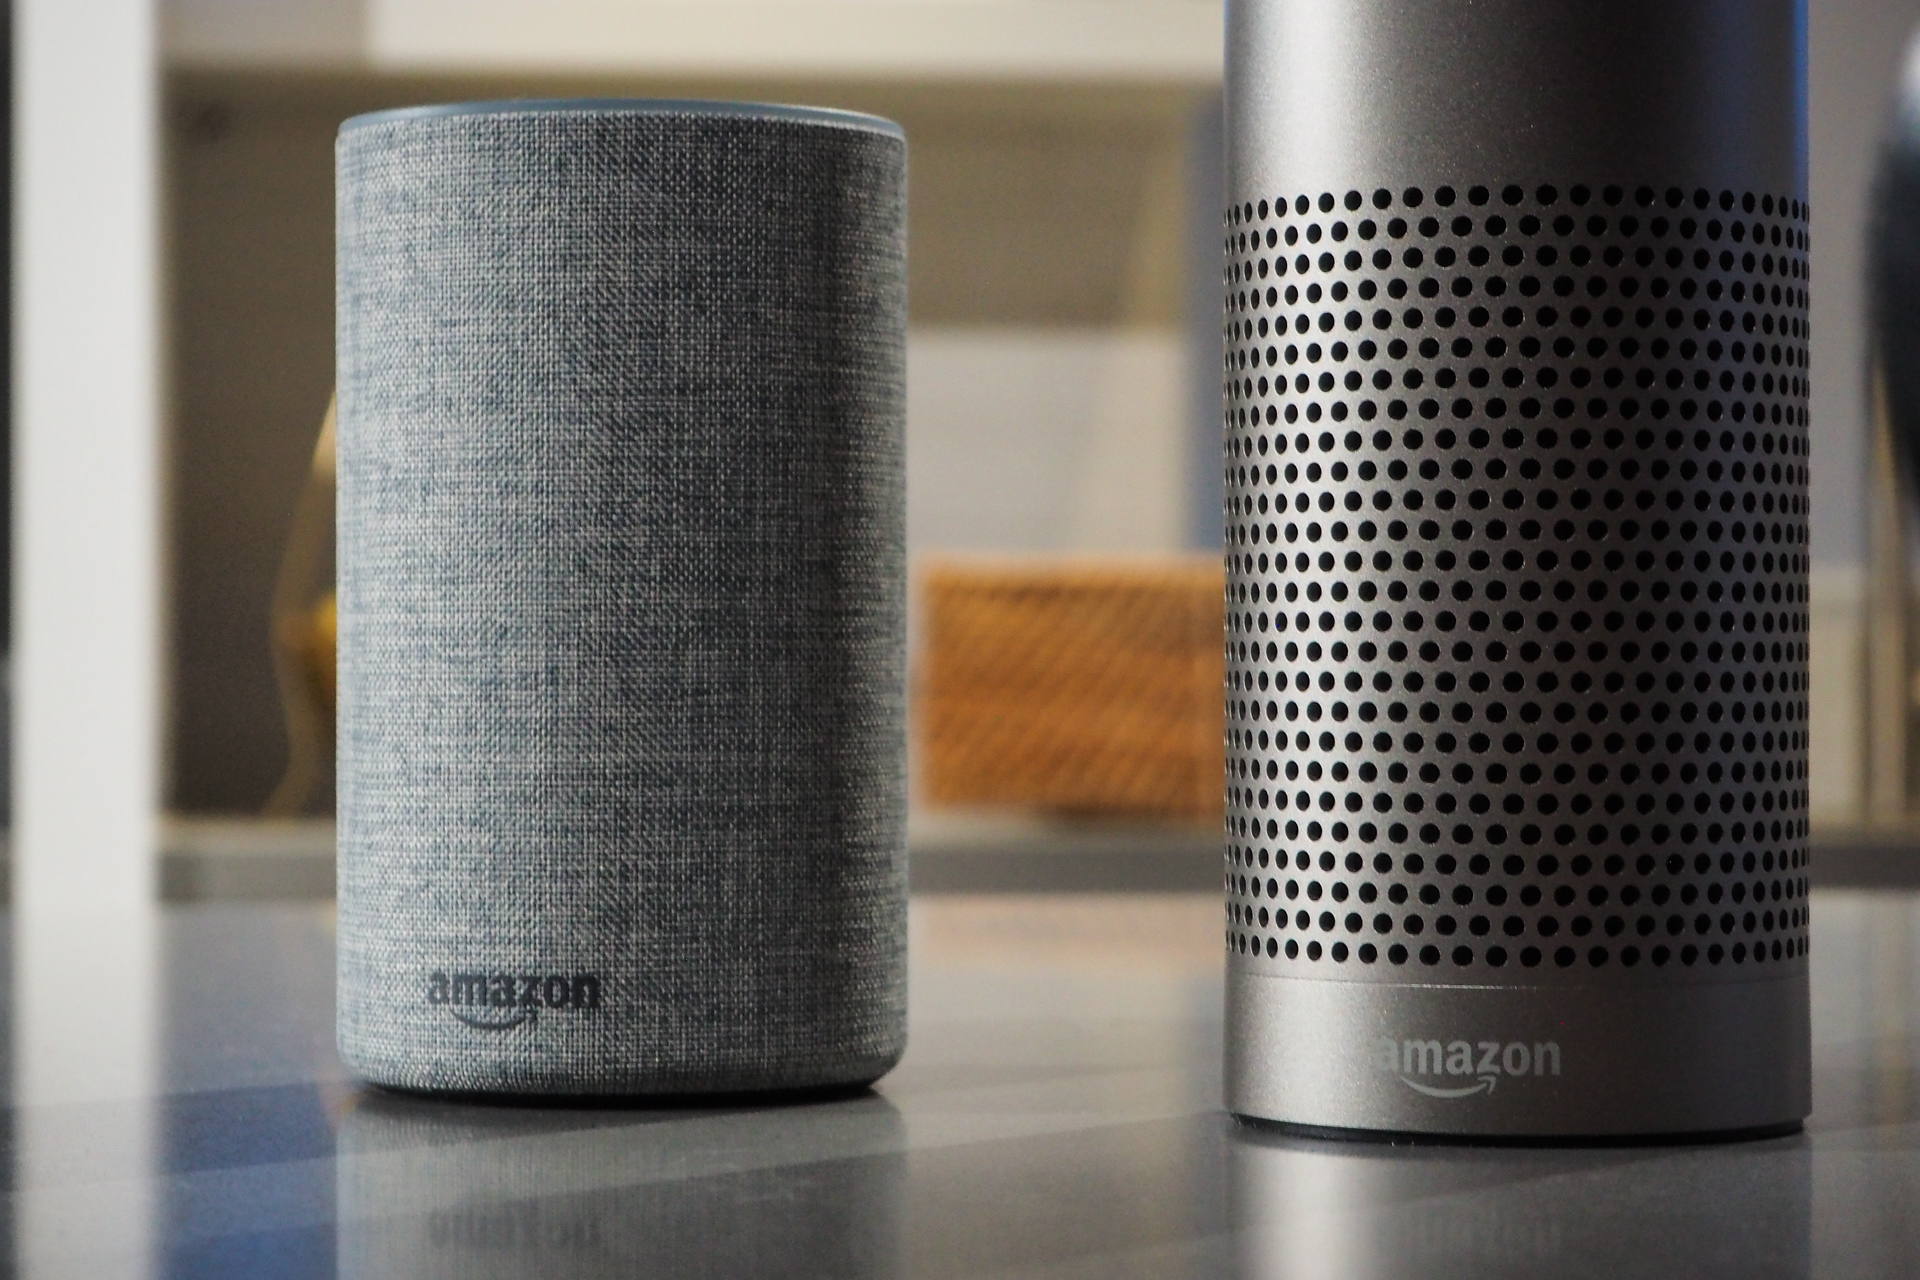 Amazon Alexa devices can finally tell voices apart